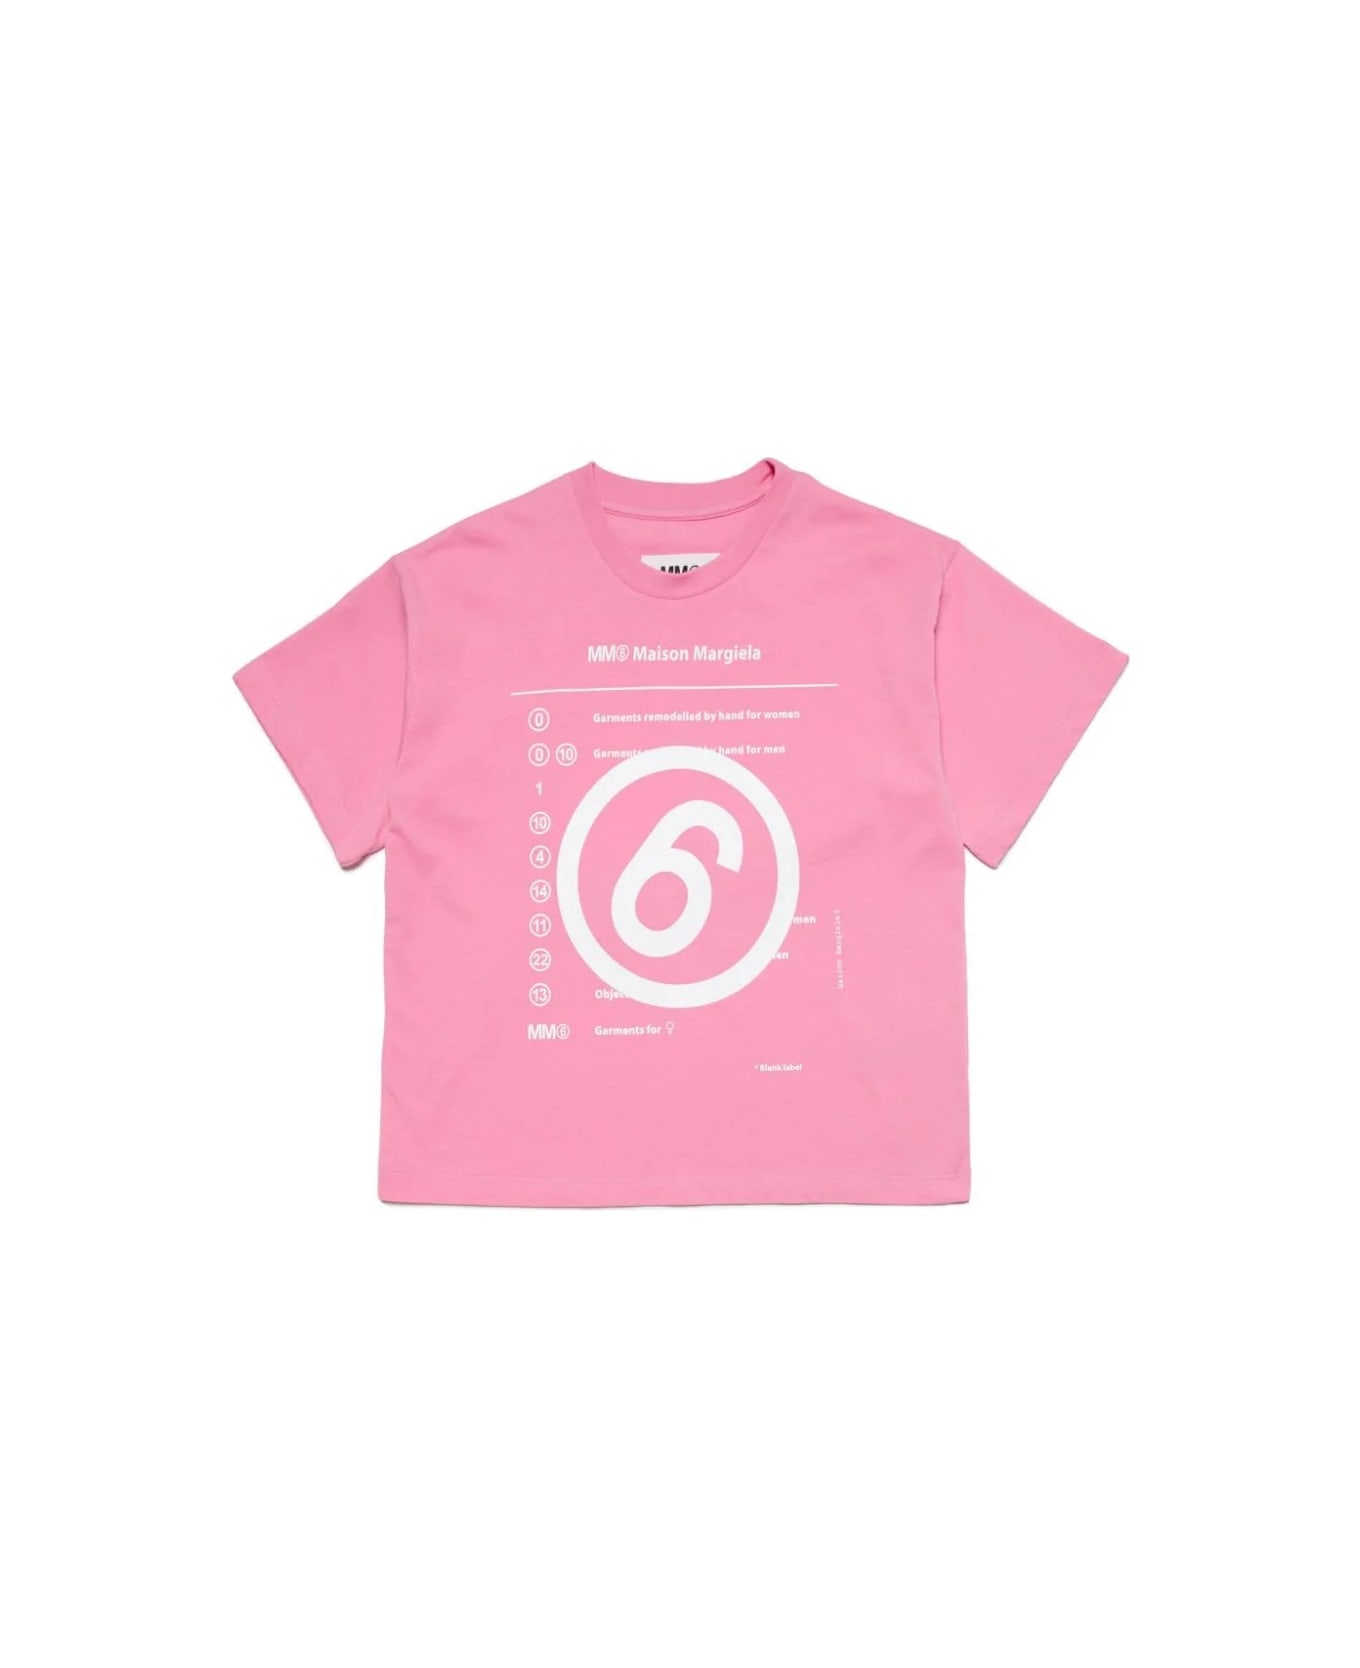 MM6 Maison Margiela T-shirt With Print - Pink